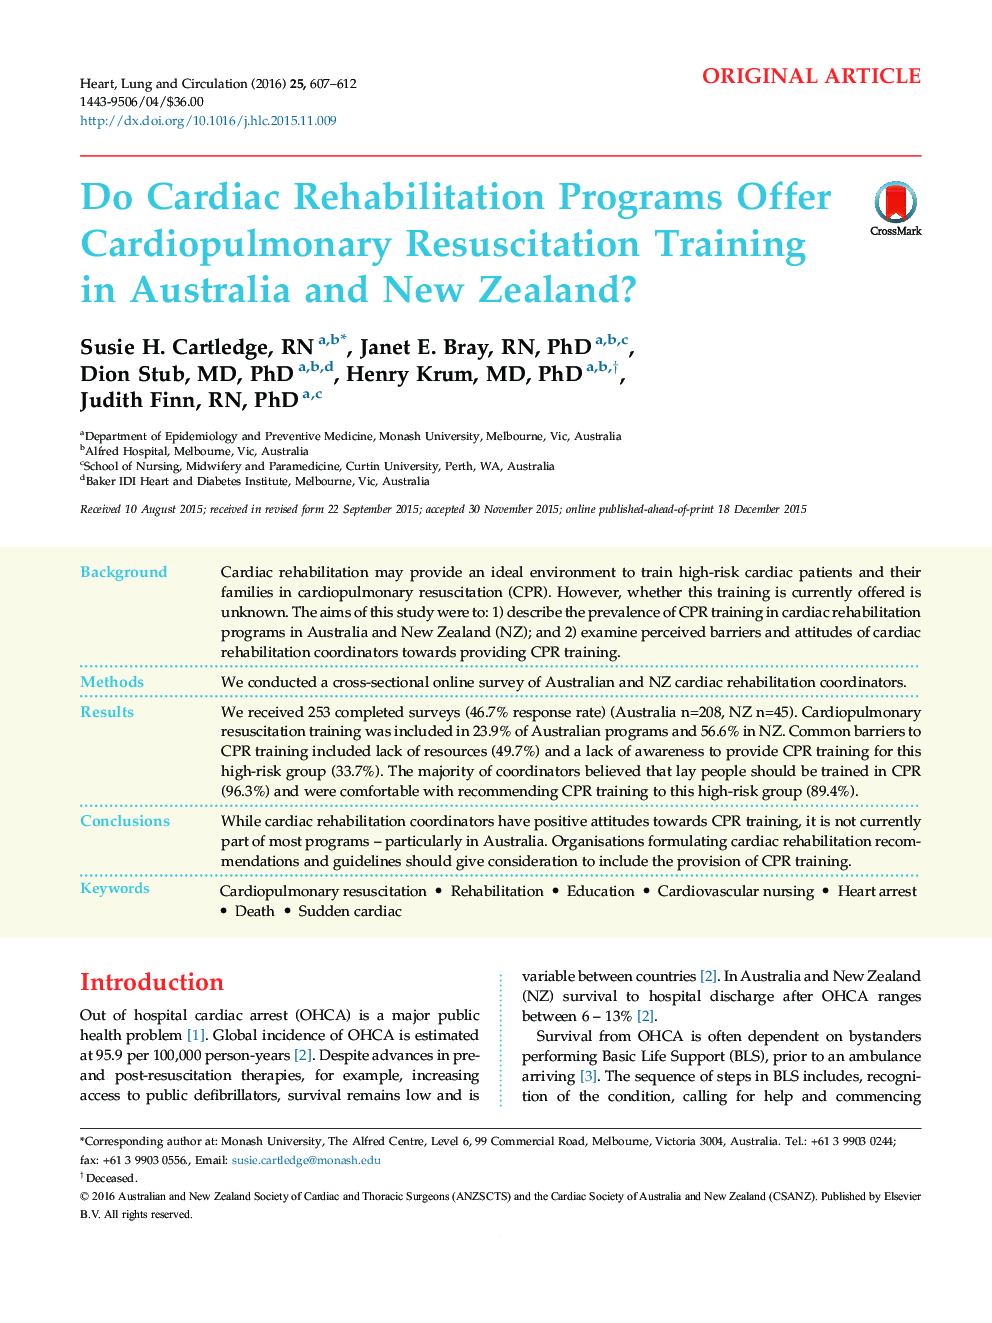 Do Cardiac Rehabilitation Programs Offer Cardiopulmonary Resuscitation Training in Australia and New Zealand?